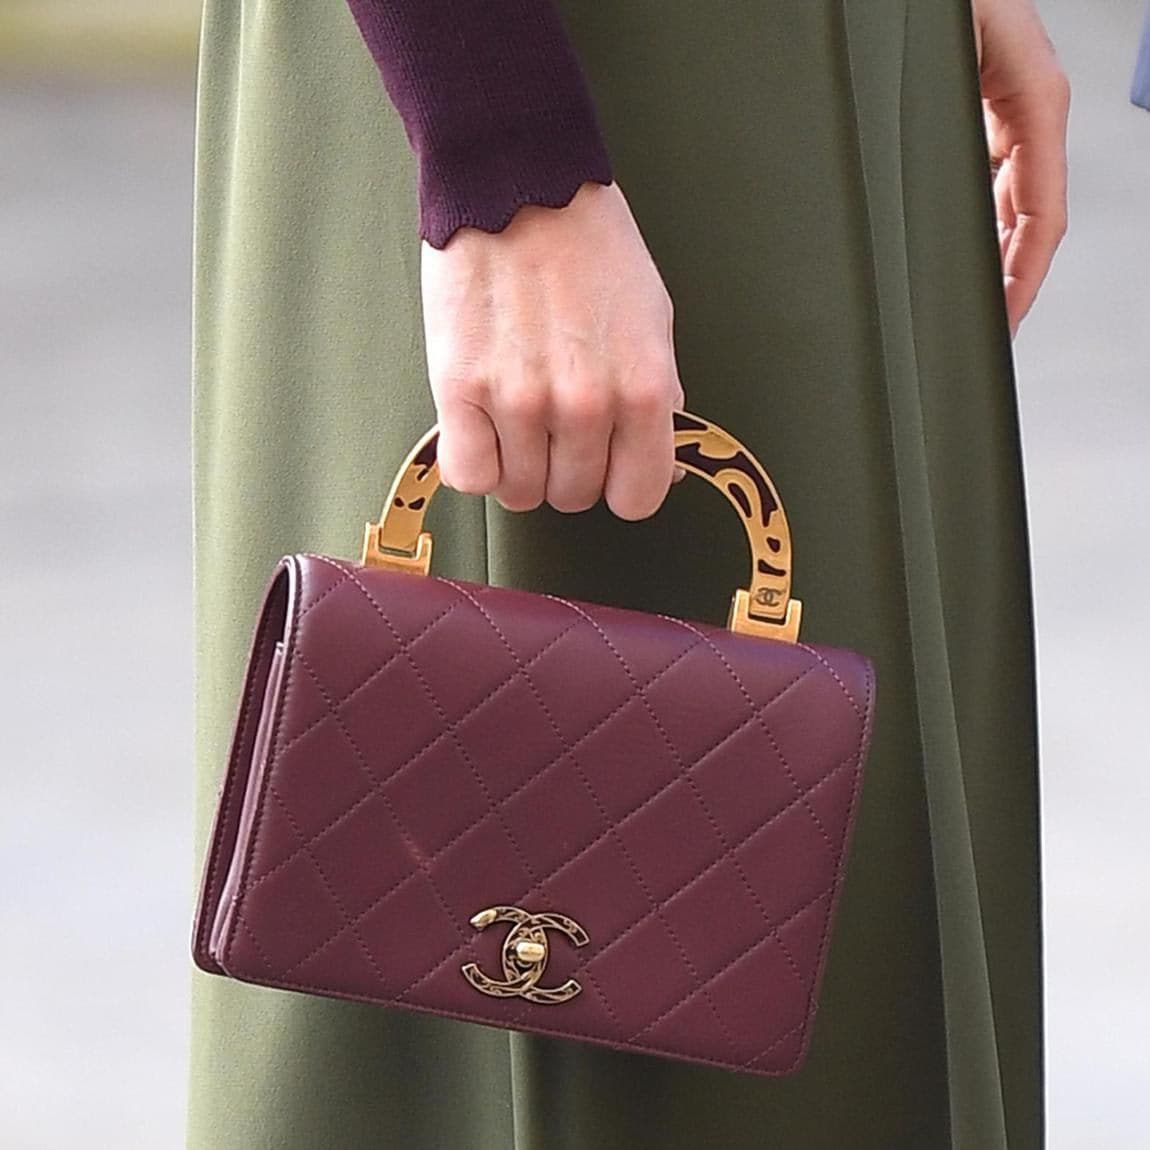 Kate Middleton Chanel bag look for less